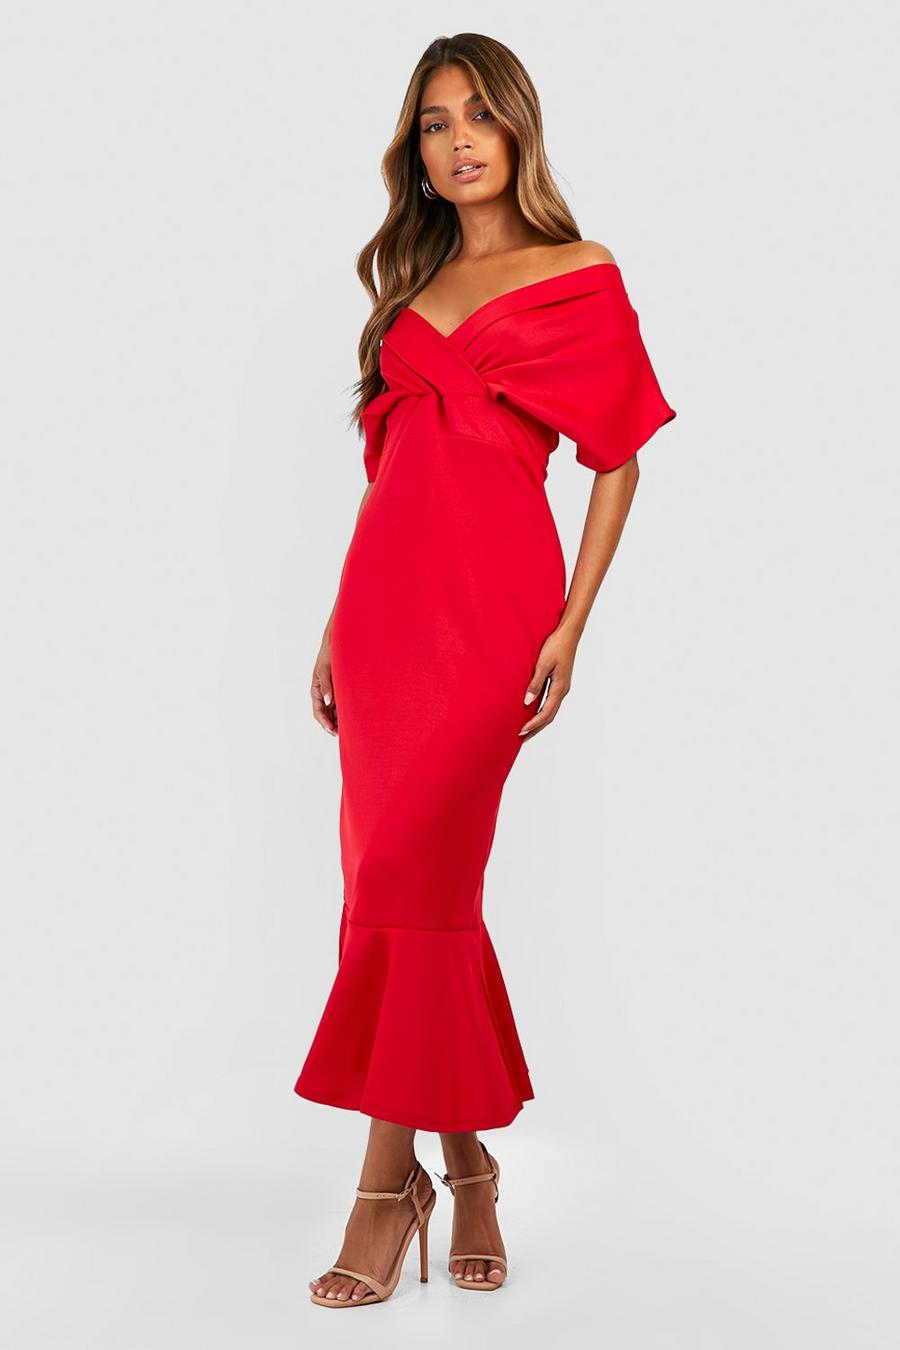 Buy VINKKE Women's Plus Size Off Shoulder Peplum Dress Checked